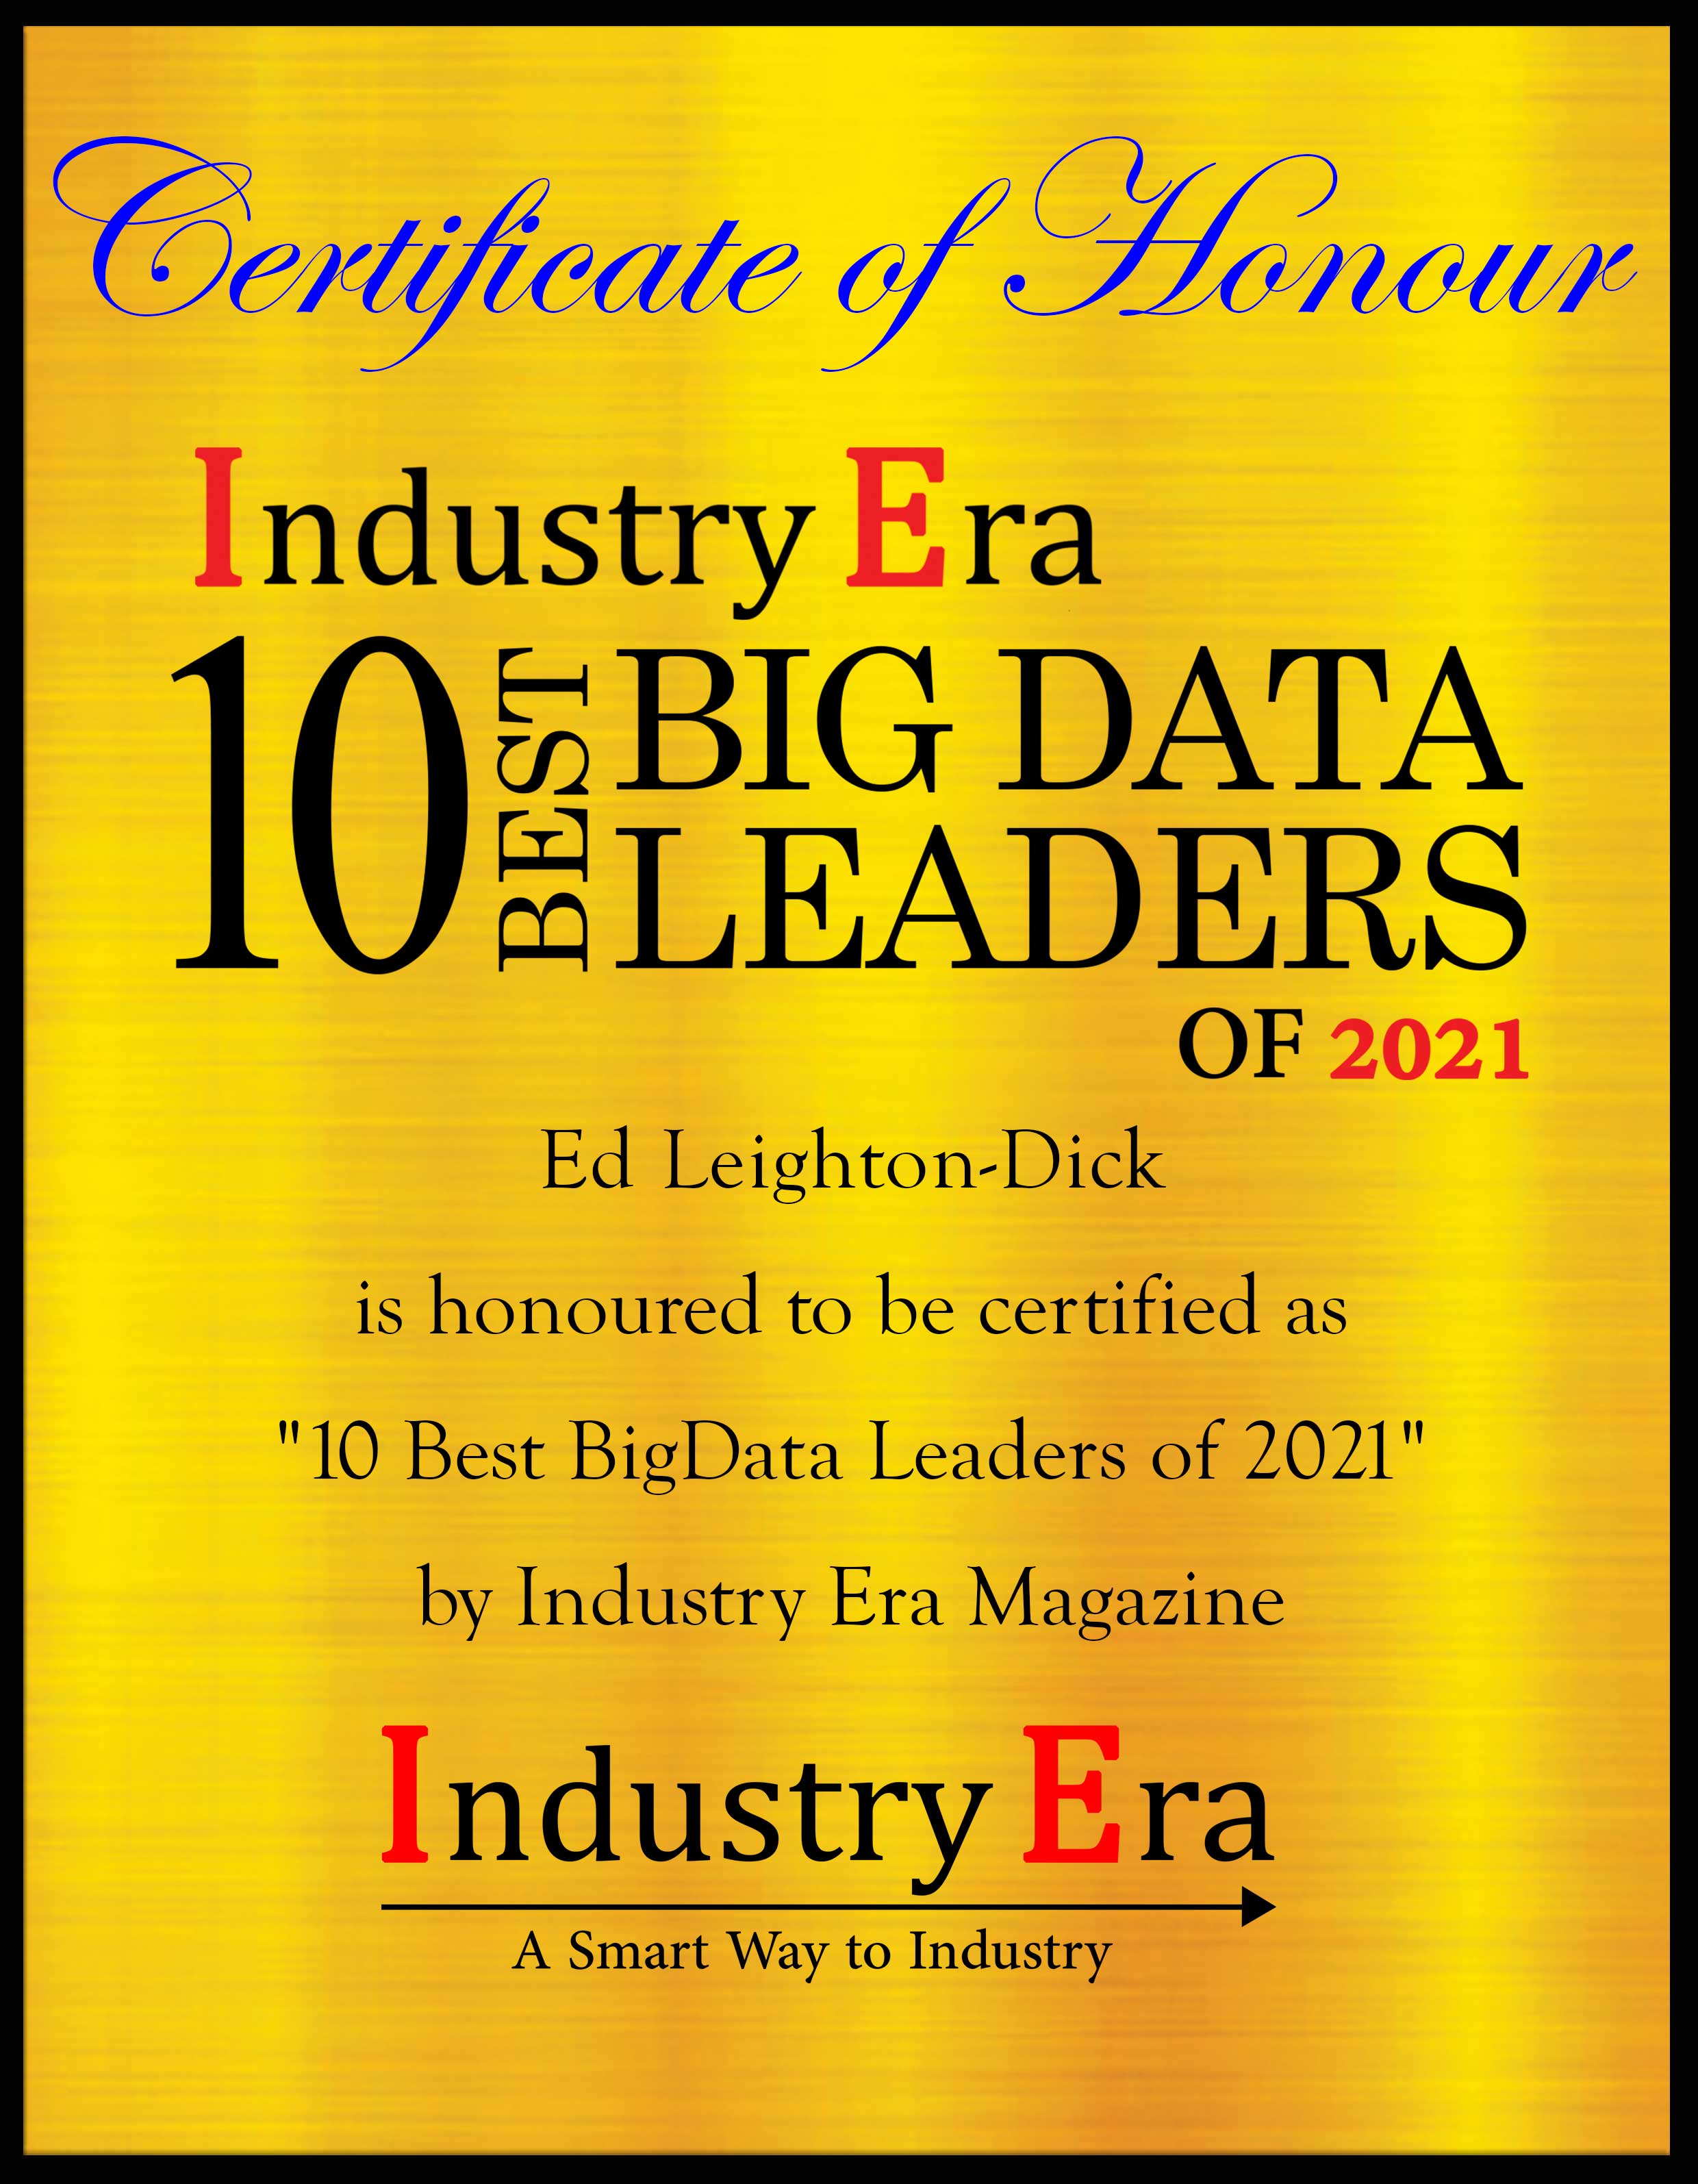 Ed Leighton-Dick, Founder & President of Kingfisher Technologies Certificate